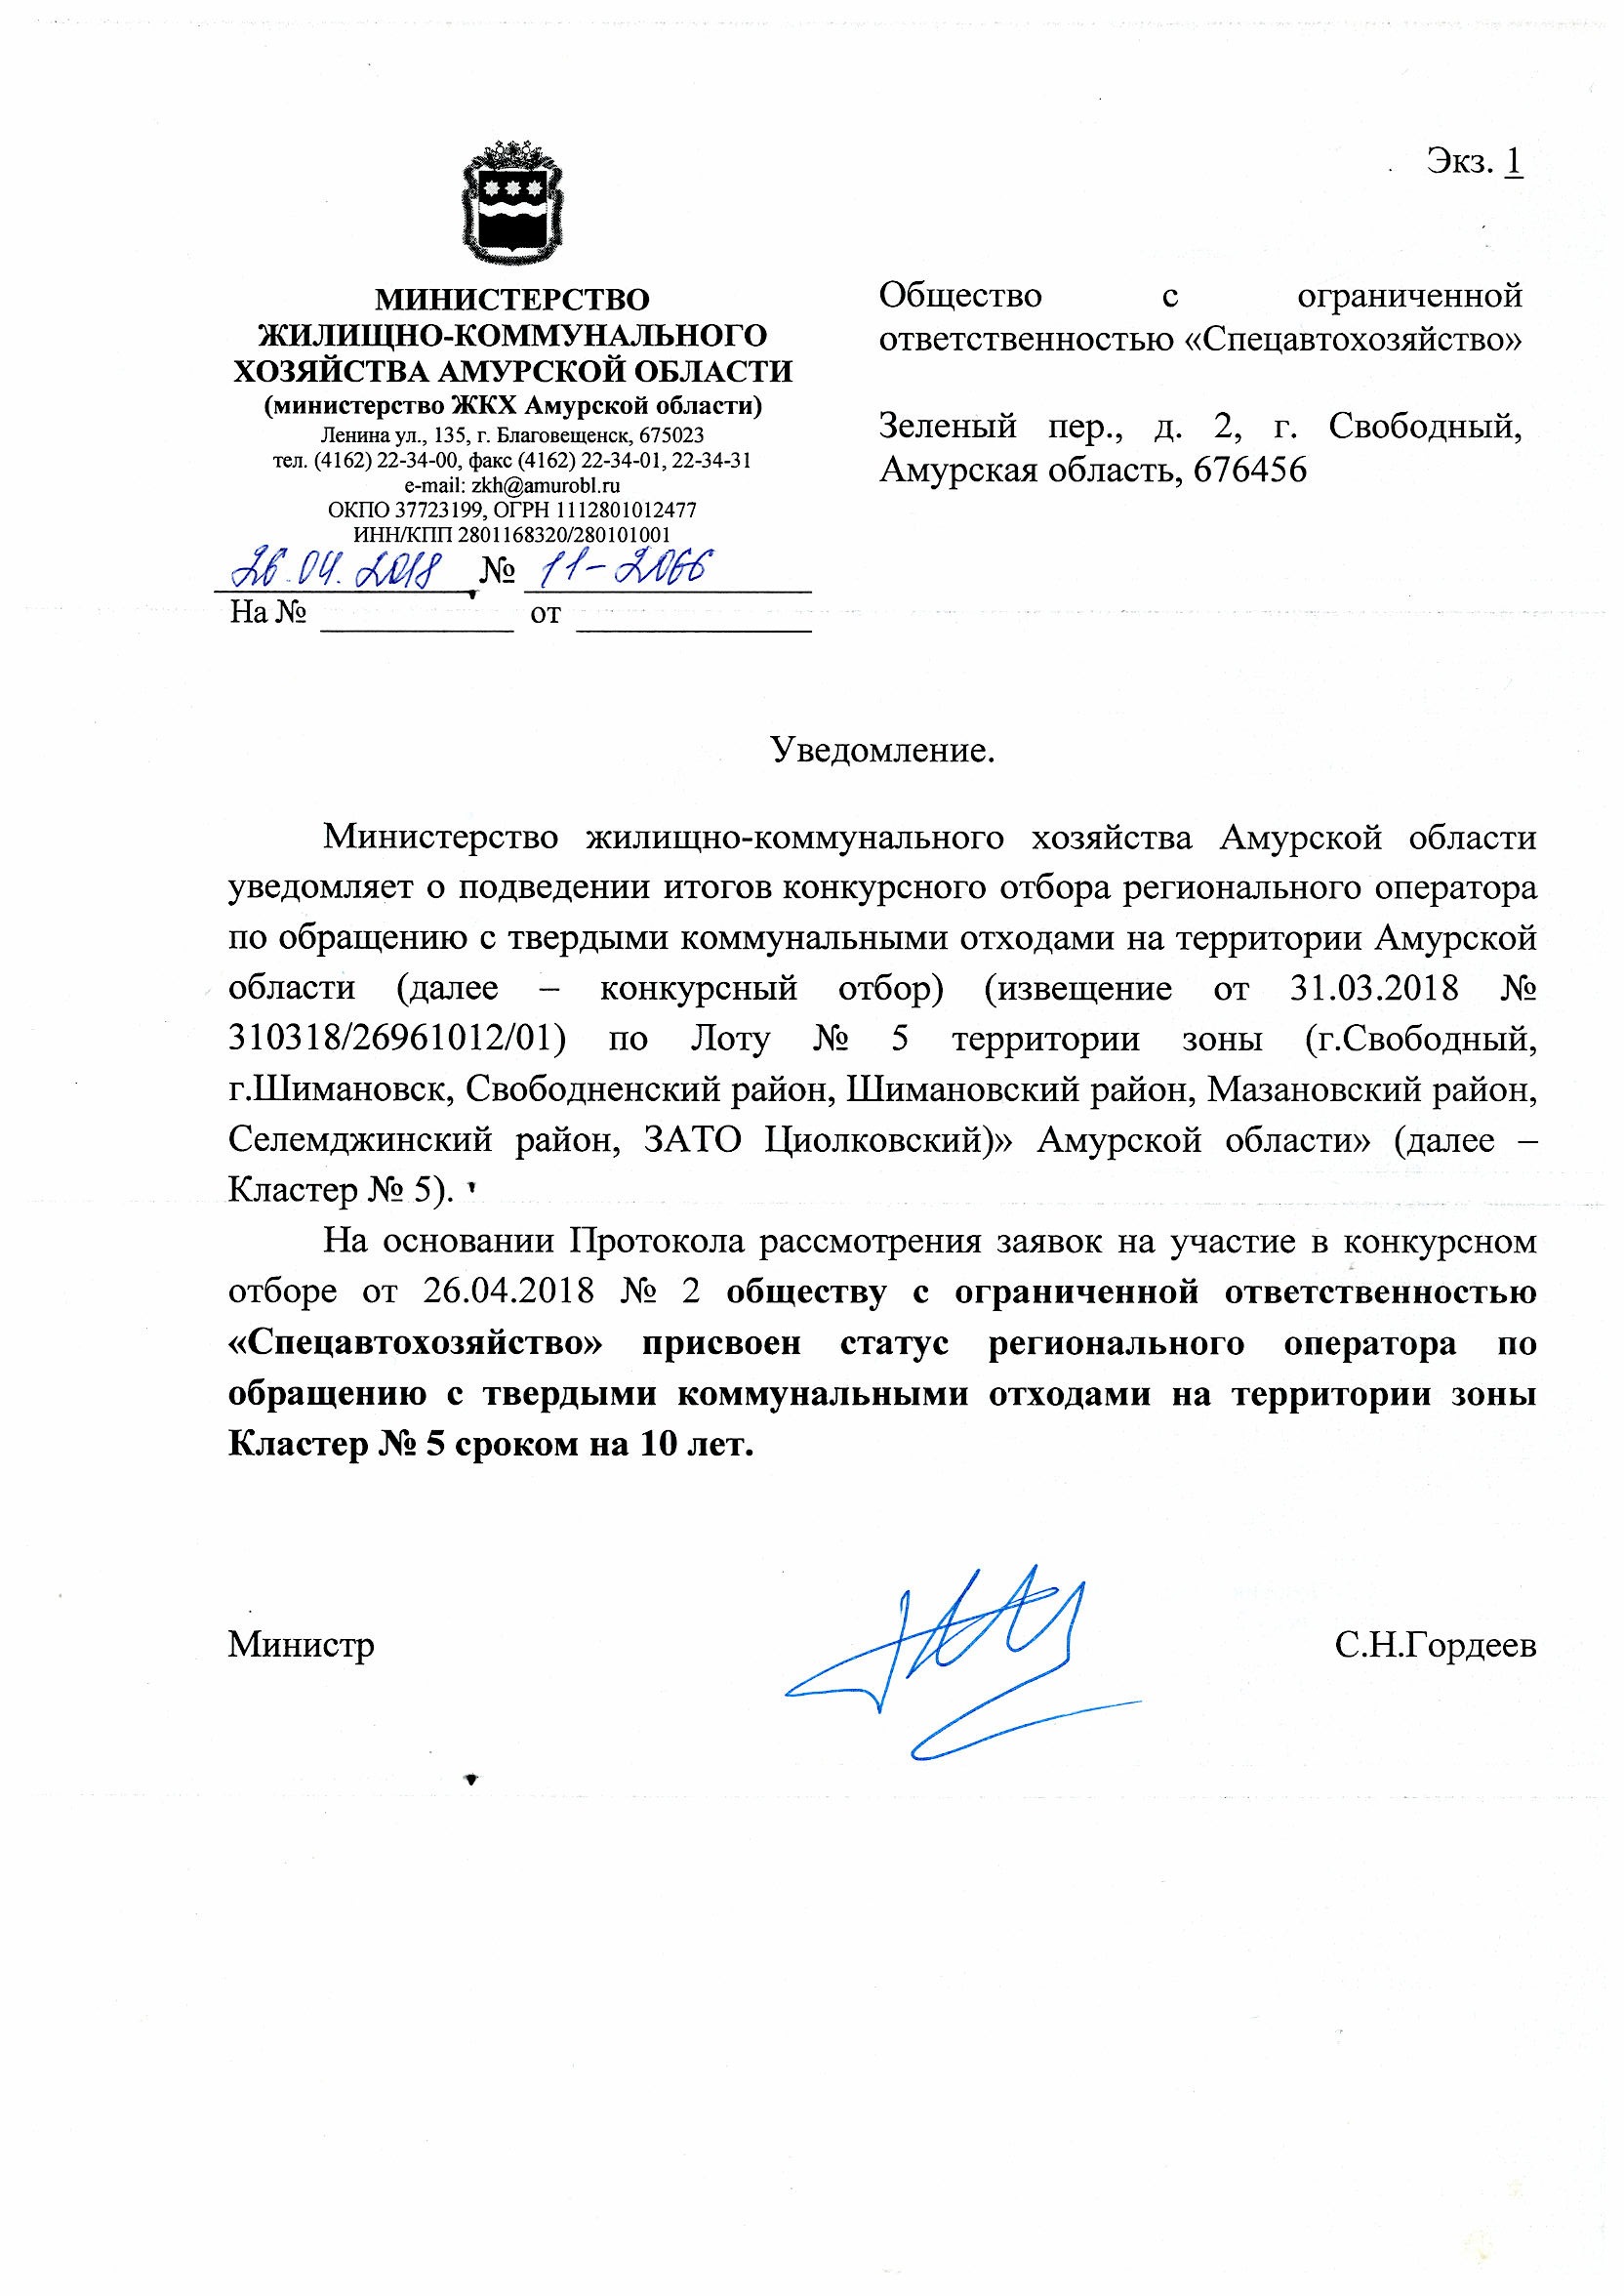 Министерство ЖКХ Амурской области.